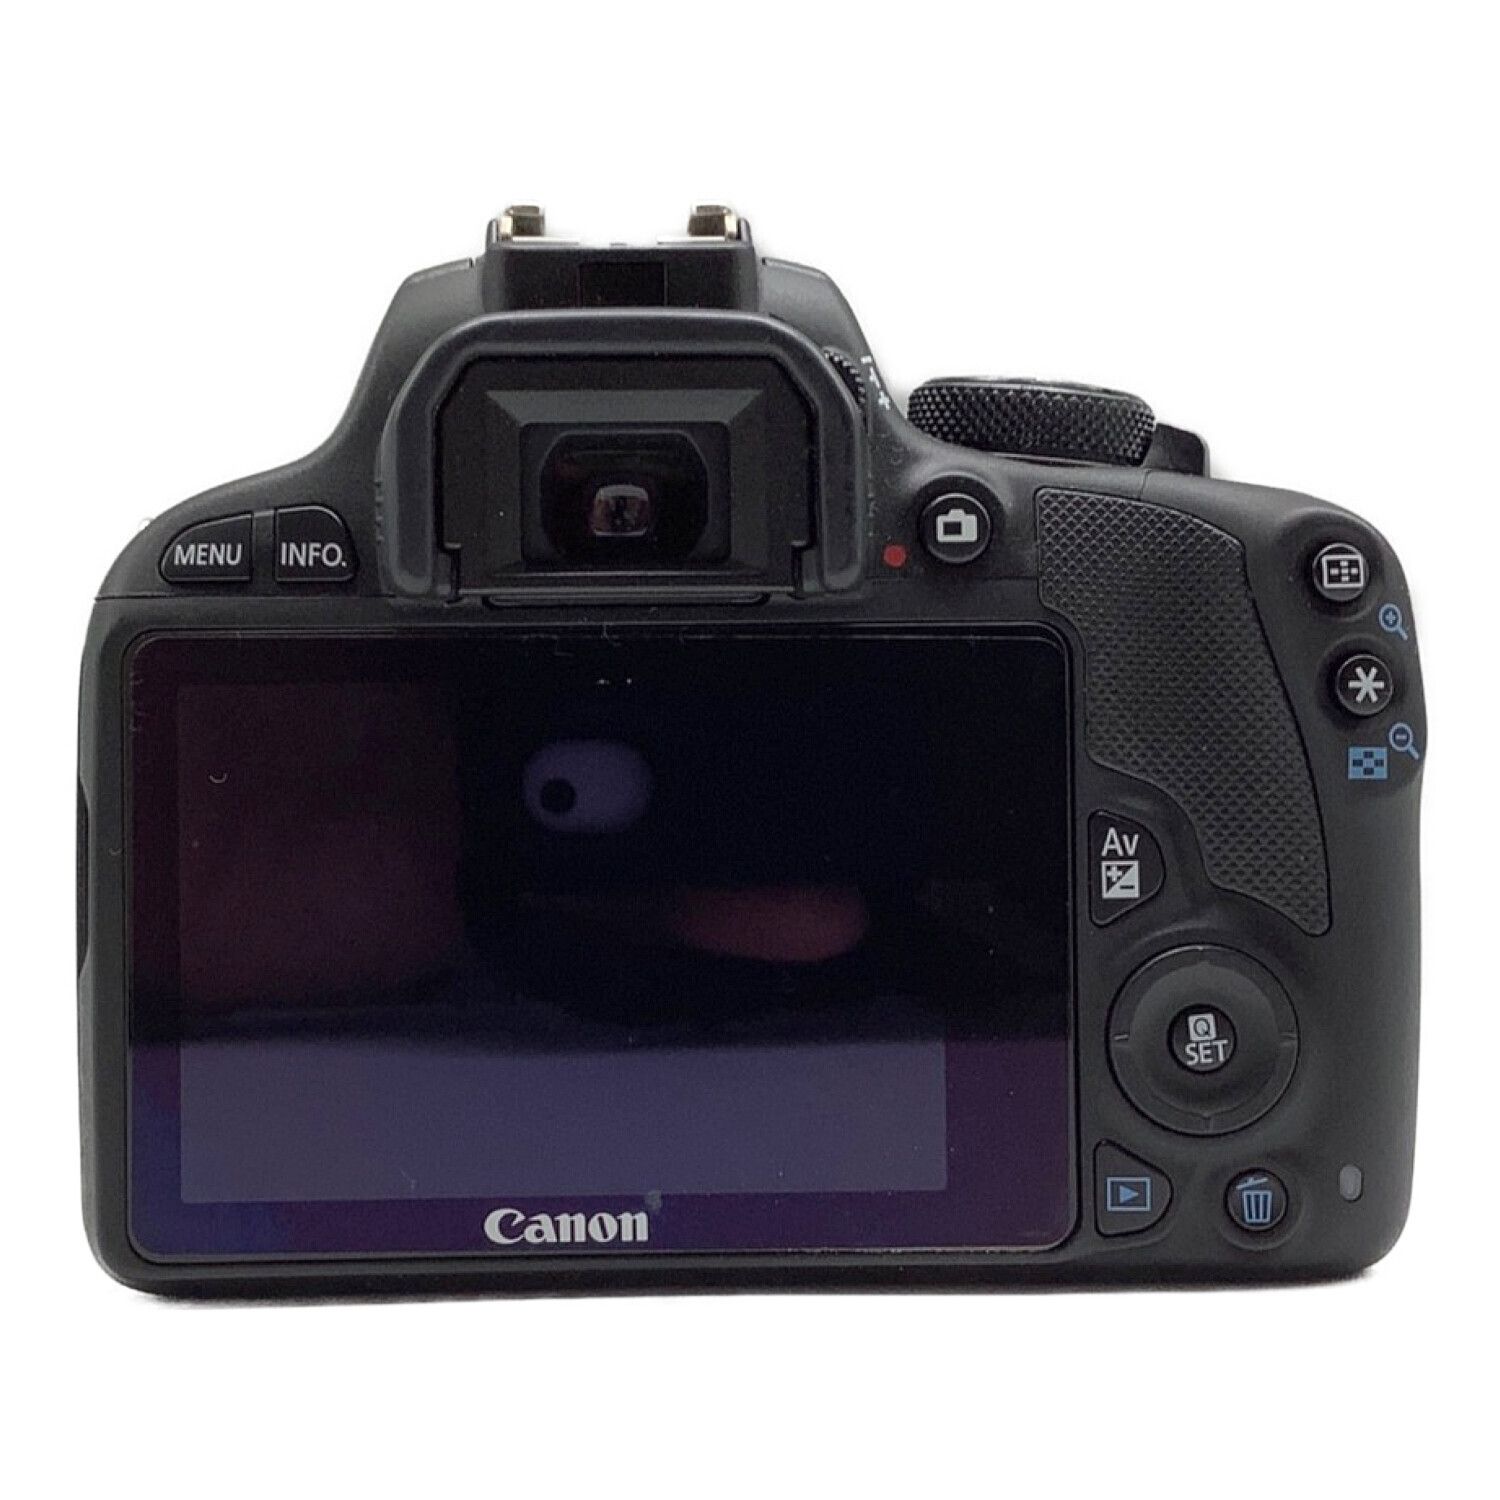 CANON (キャノン) デジタル一眼レフカメラ EOS kiss X7 DS126441 1800